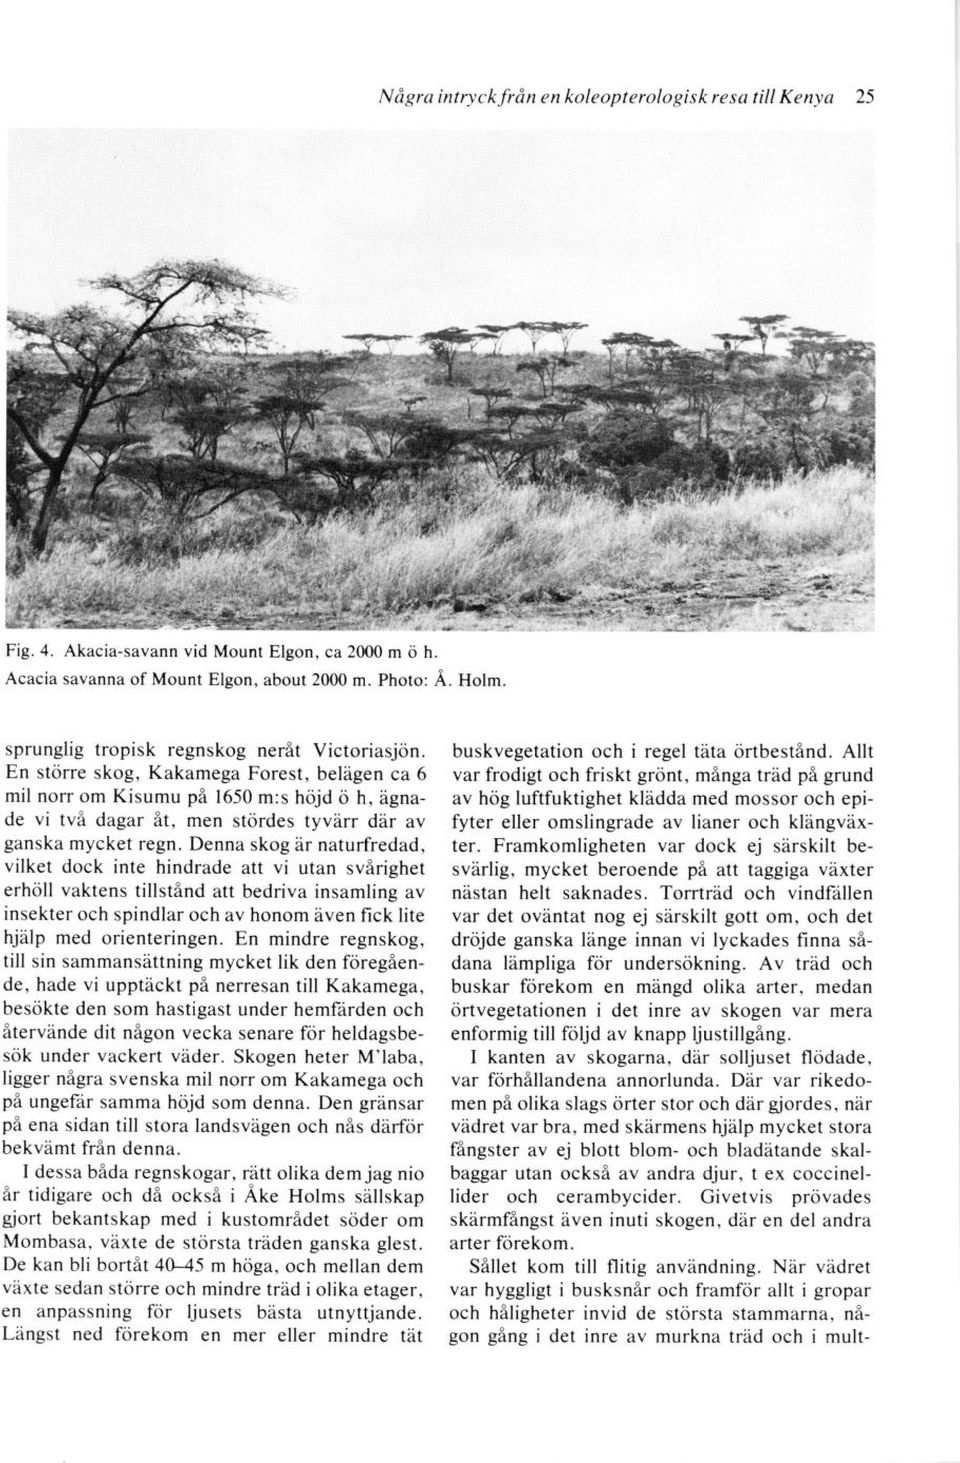 Akacia-savann vid Mount Elgon, ca 2000 m